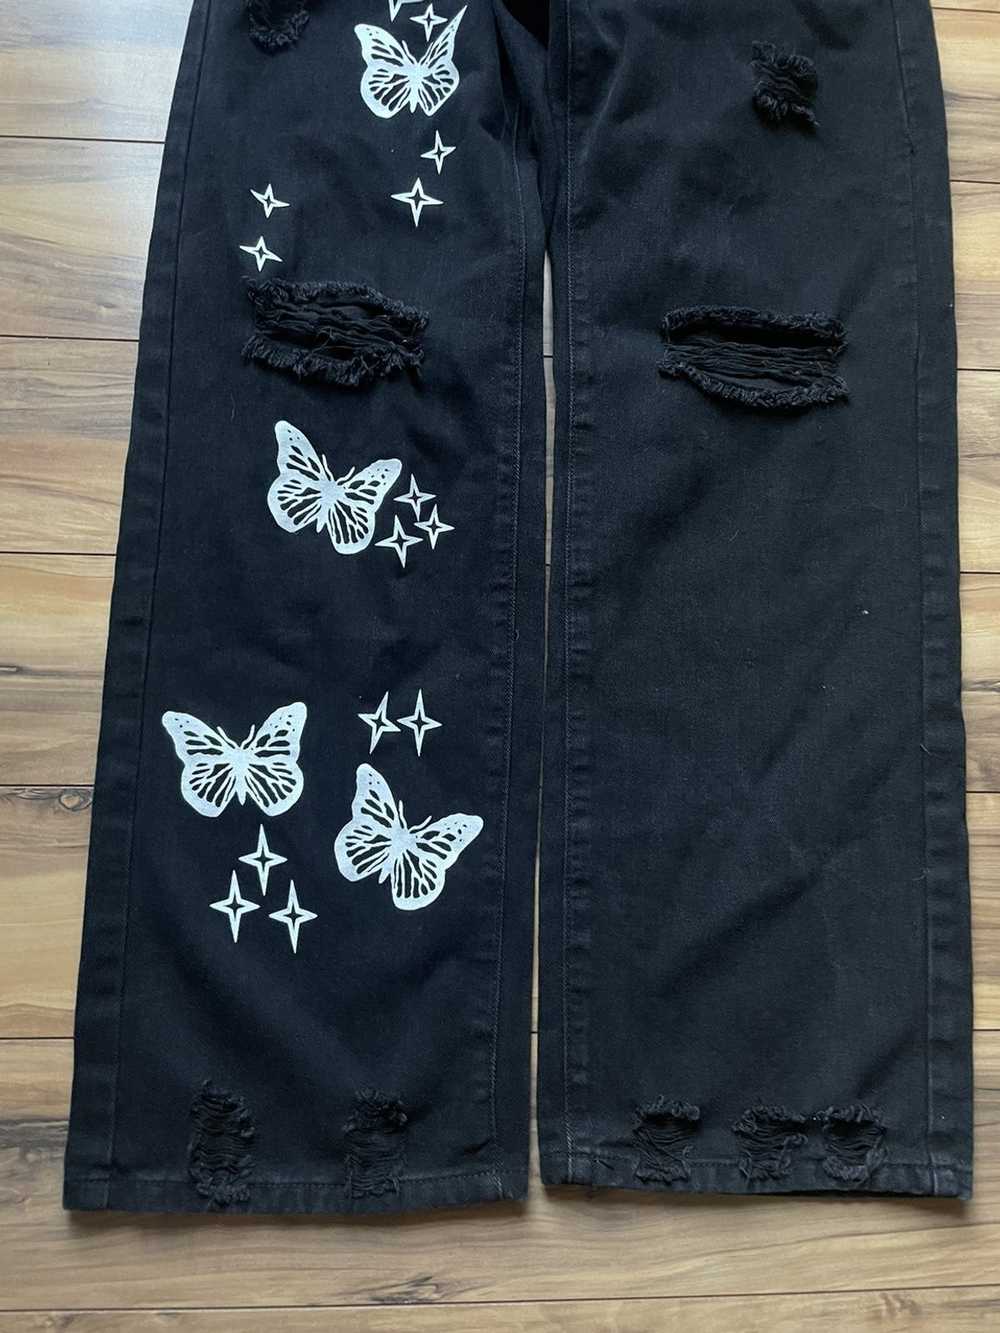 Shein Butterflies shein black jeans - image 2